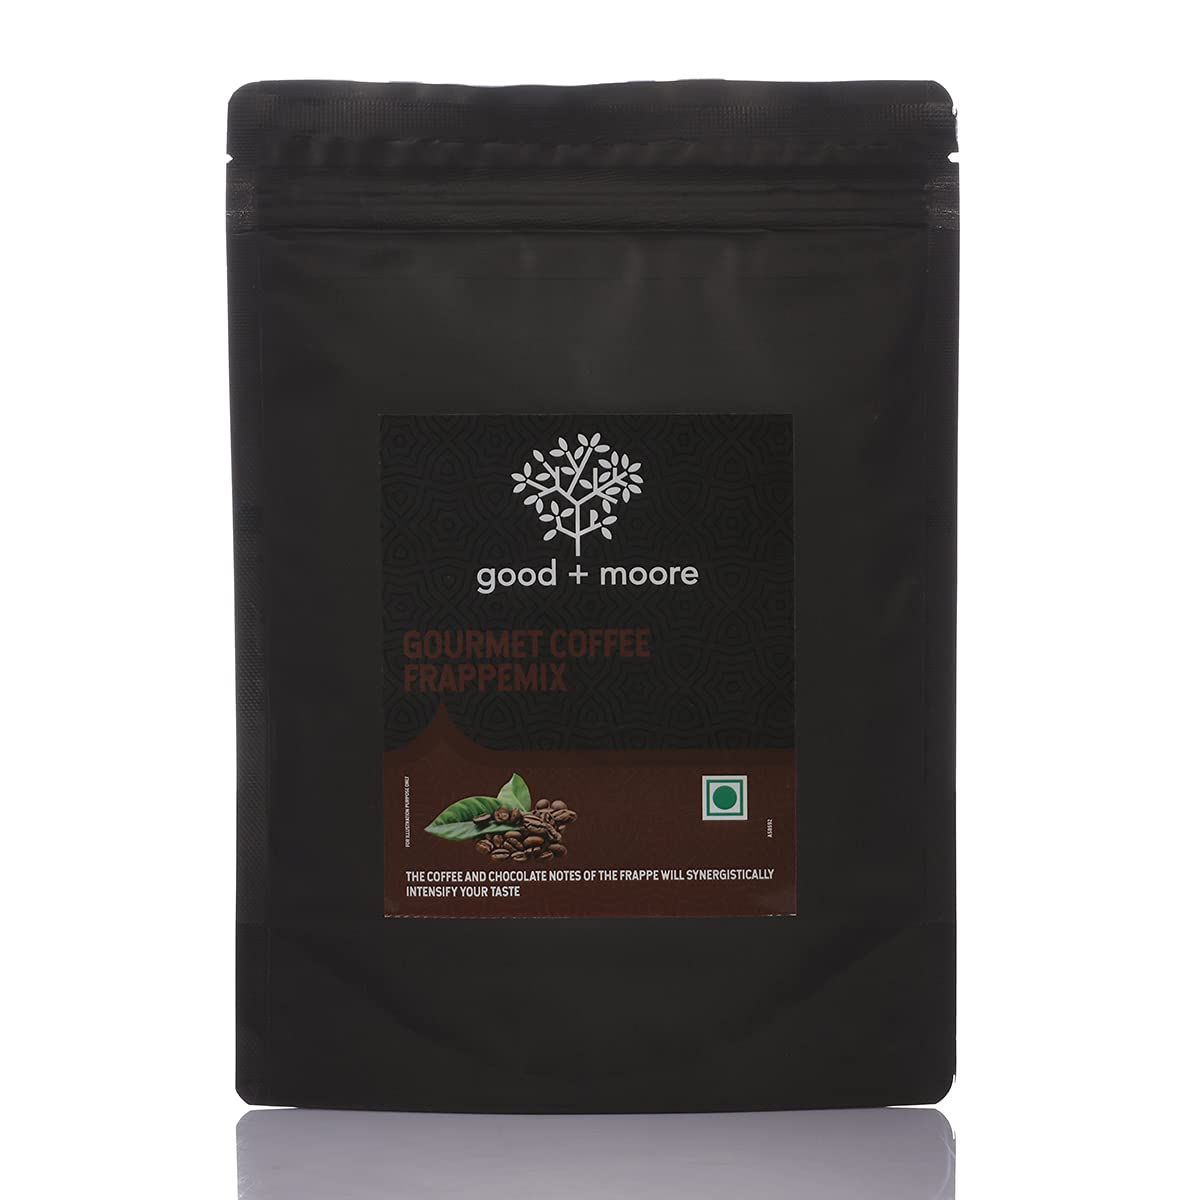 Good+Moore Gourmet Coffee Frappemix Image